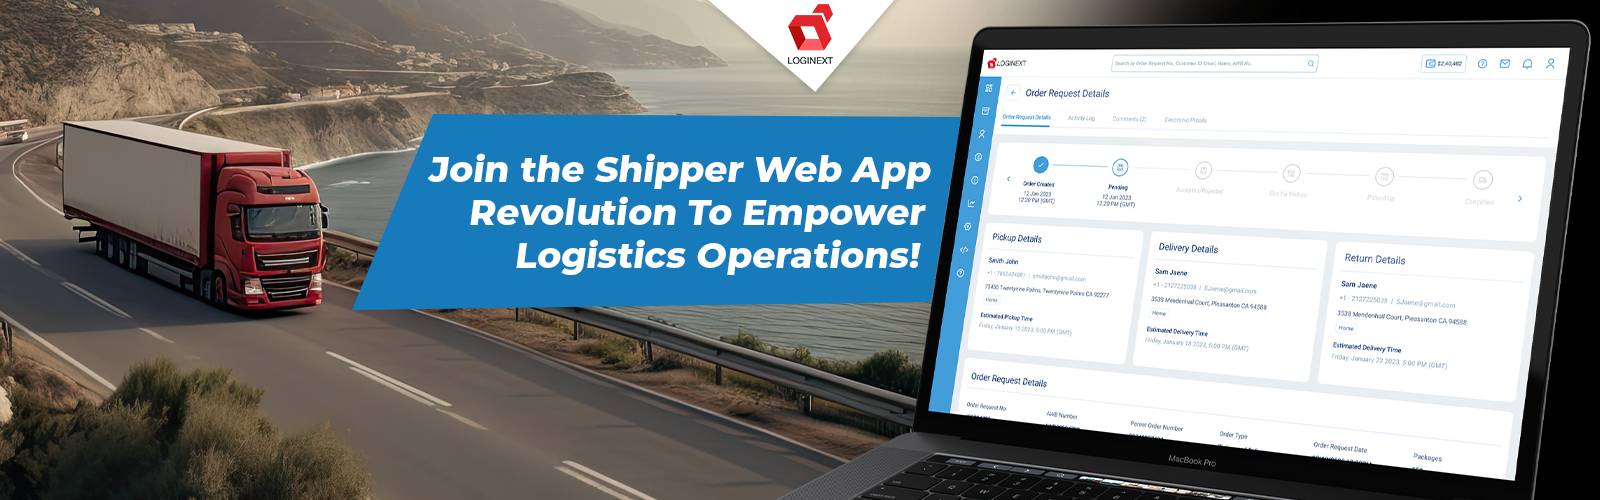 Best Shipper Web App For Logistics Operations